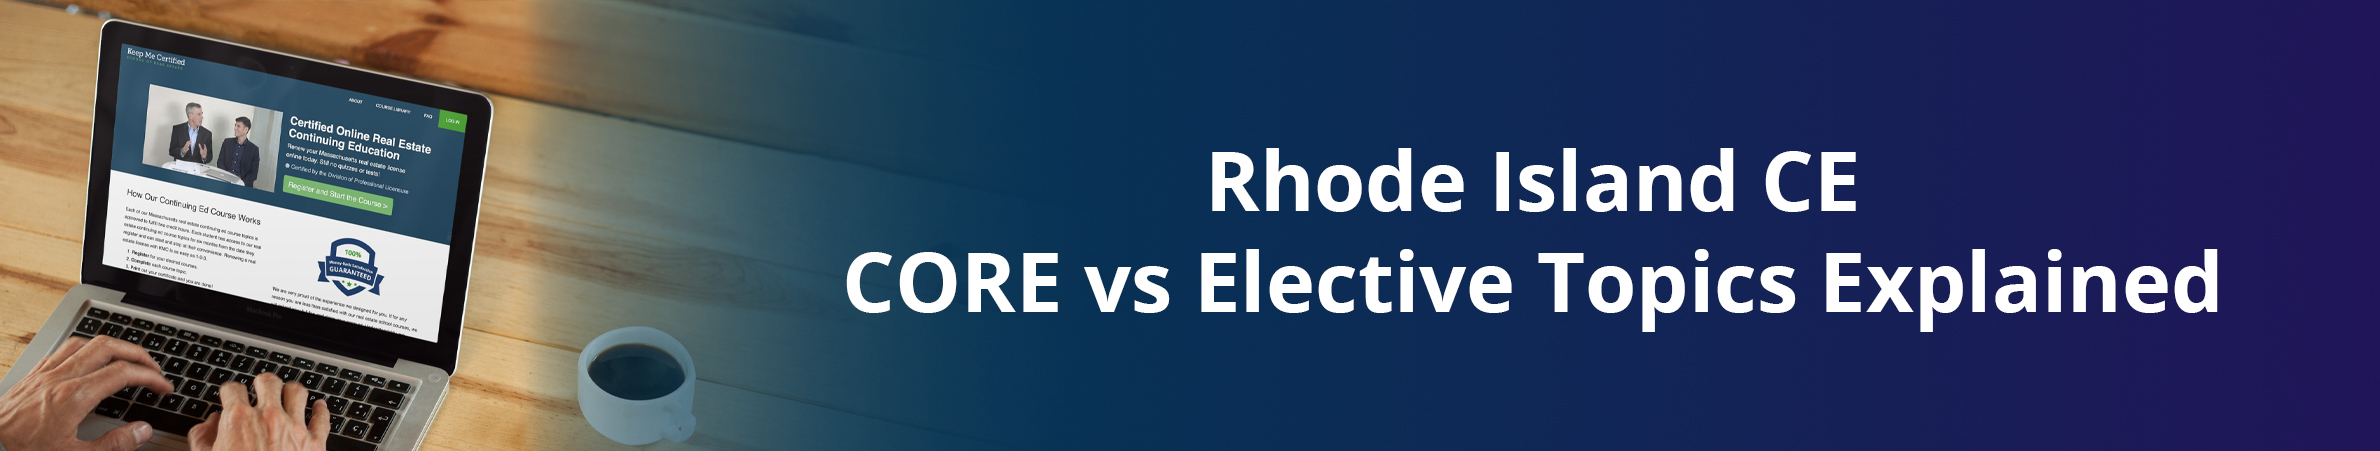 Rhode Island Core vs elective topics